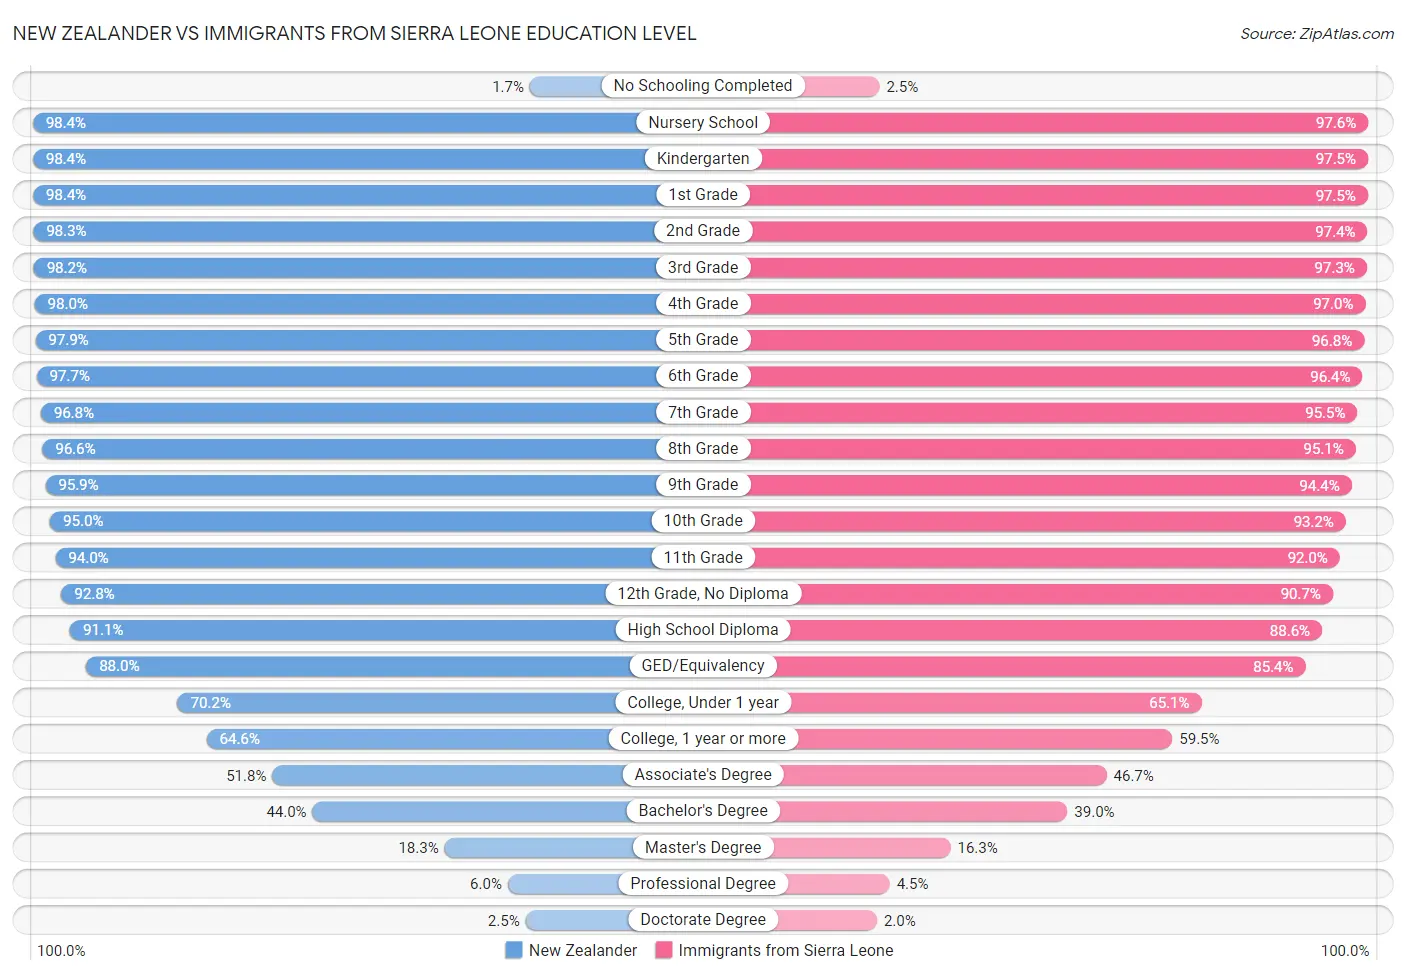 New Zealander vs Immigrants from Sierra Leone Education Level